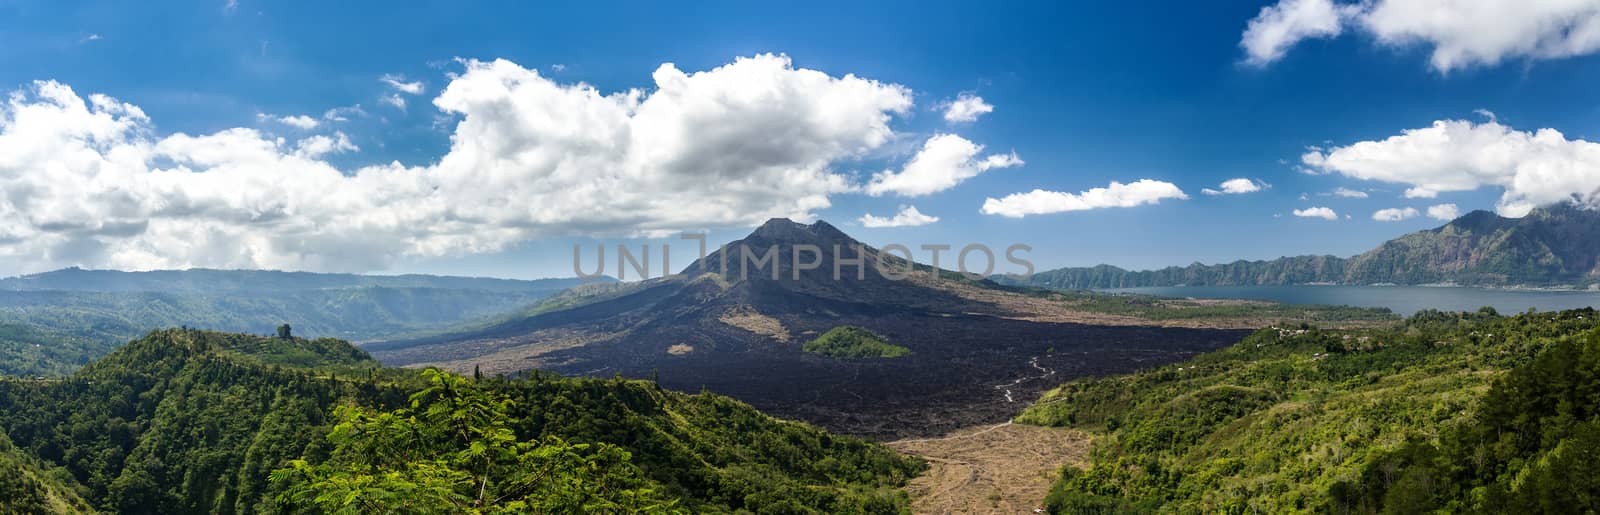 Batur volcano and Agung mountain, Bali by artush